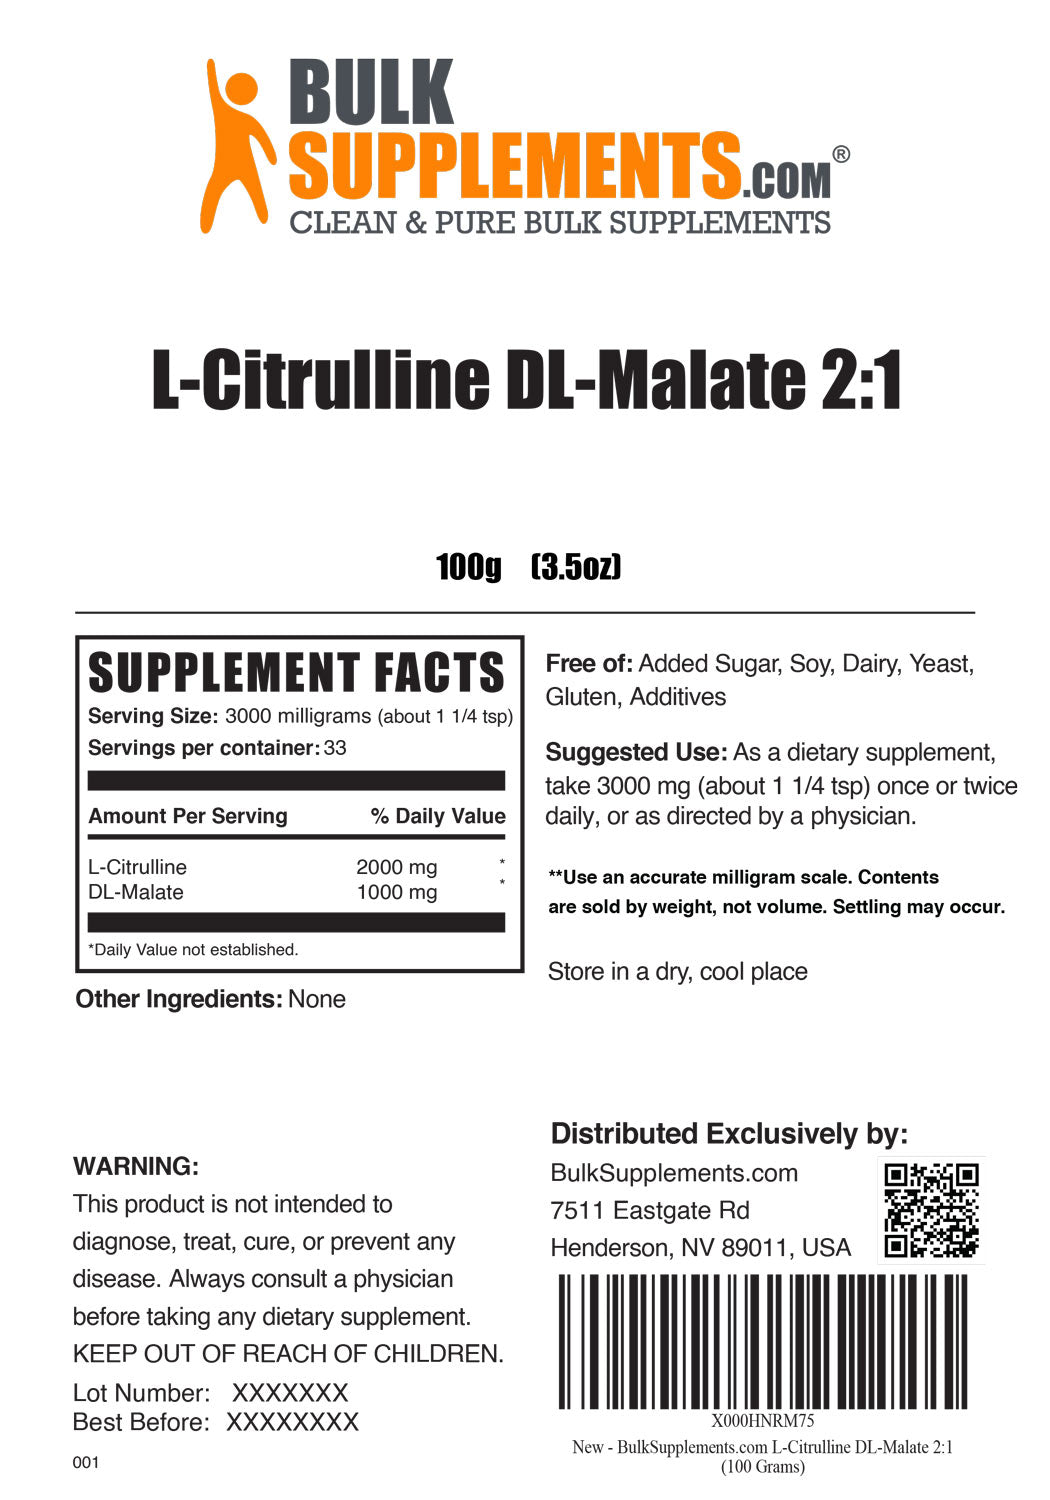 L-Citrulline DL-Malate 2:1 Supplement Facts for 100g bag